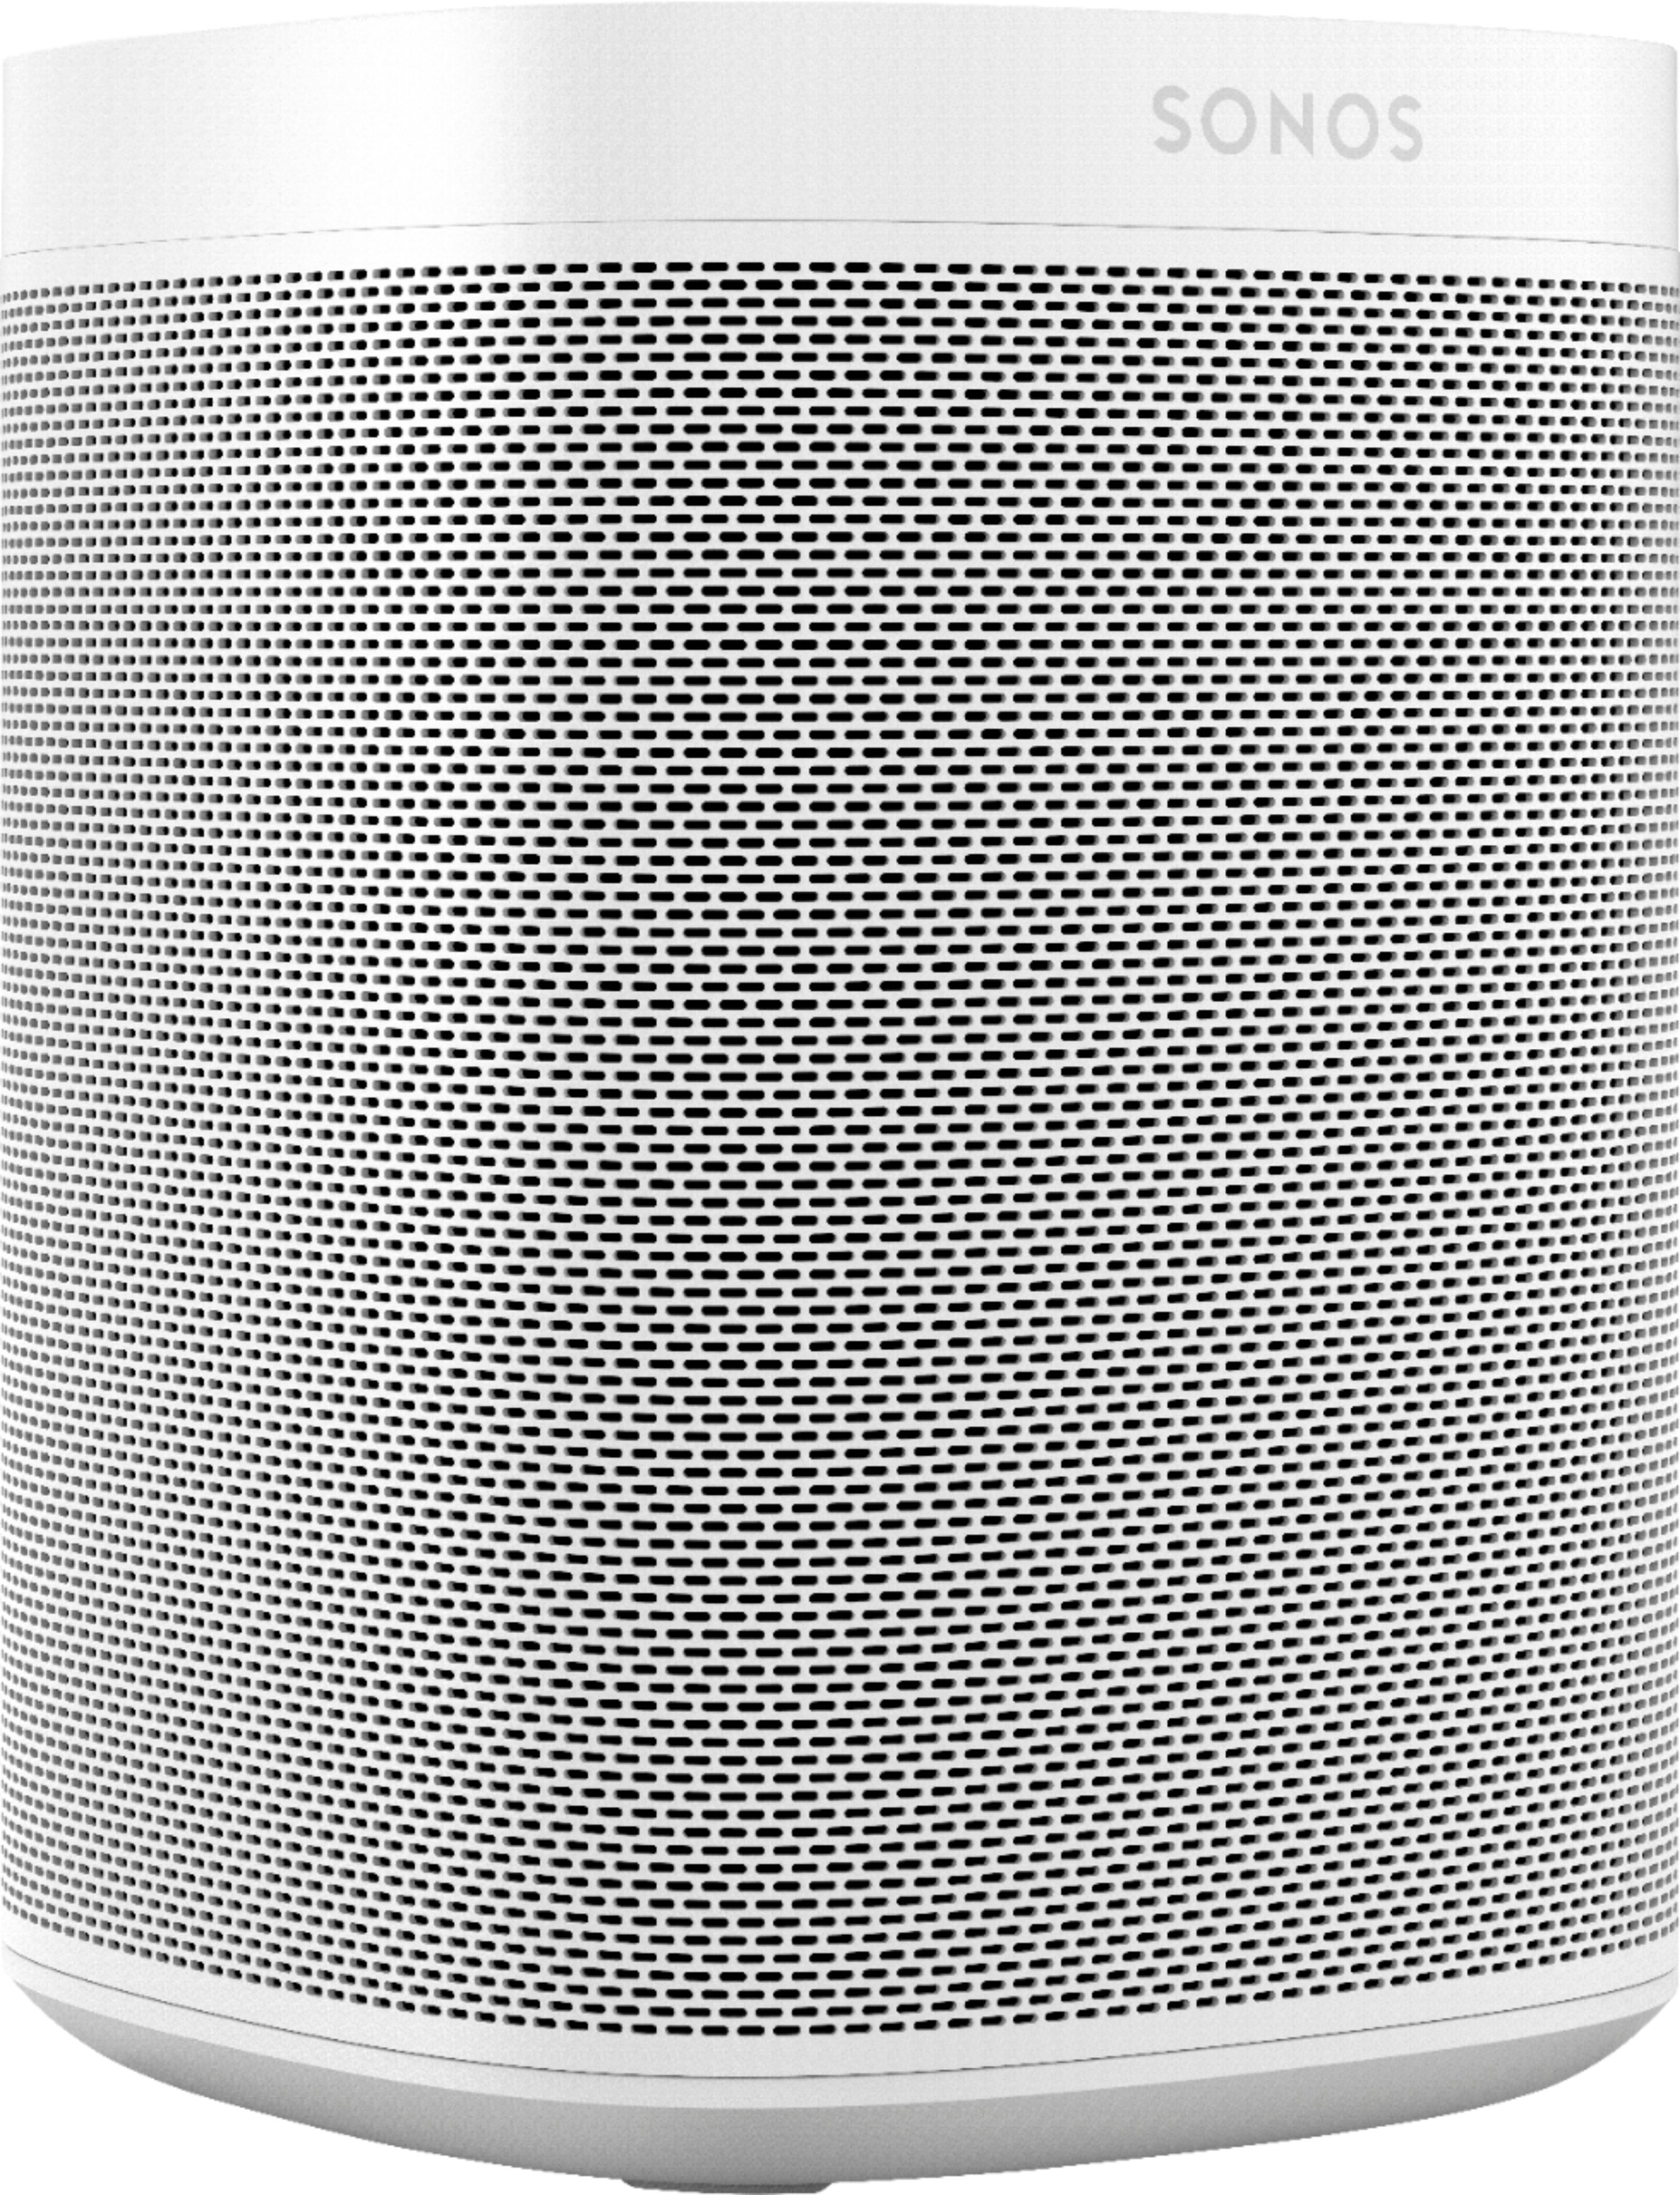 Angle View: Sonos - Geek Squad Certified Refurbished One SL Wireless Smart Speaker - White